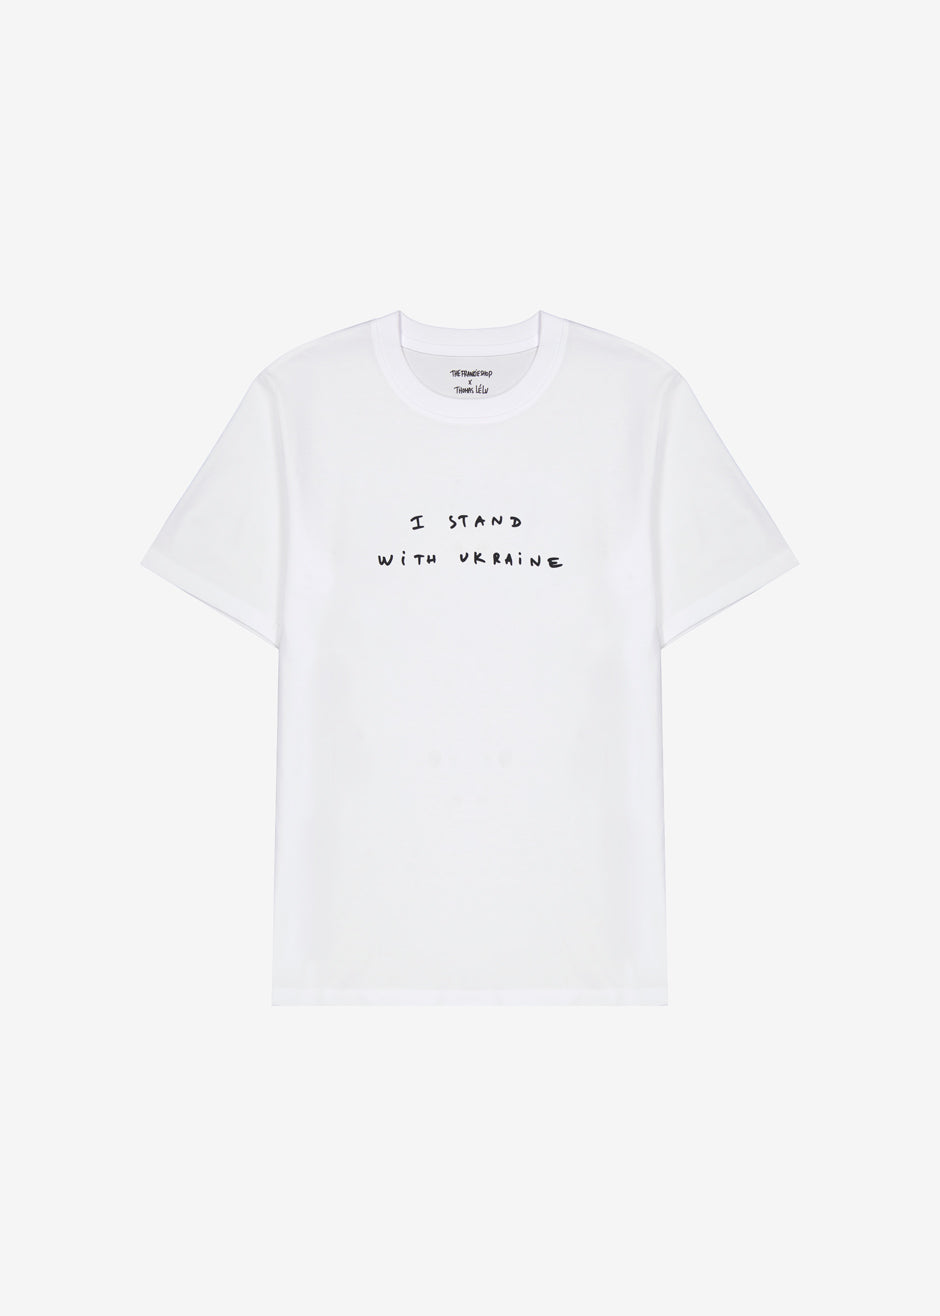 The Frankie Shop x Thomas Lélu Stand T-Shirt - White/Black - 12